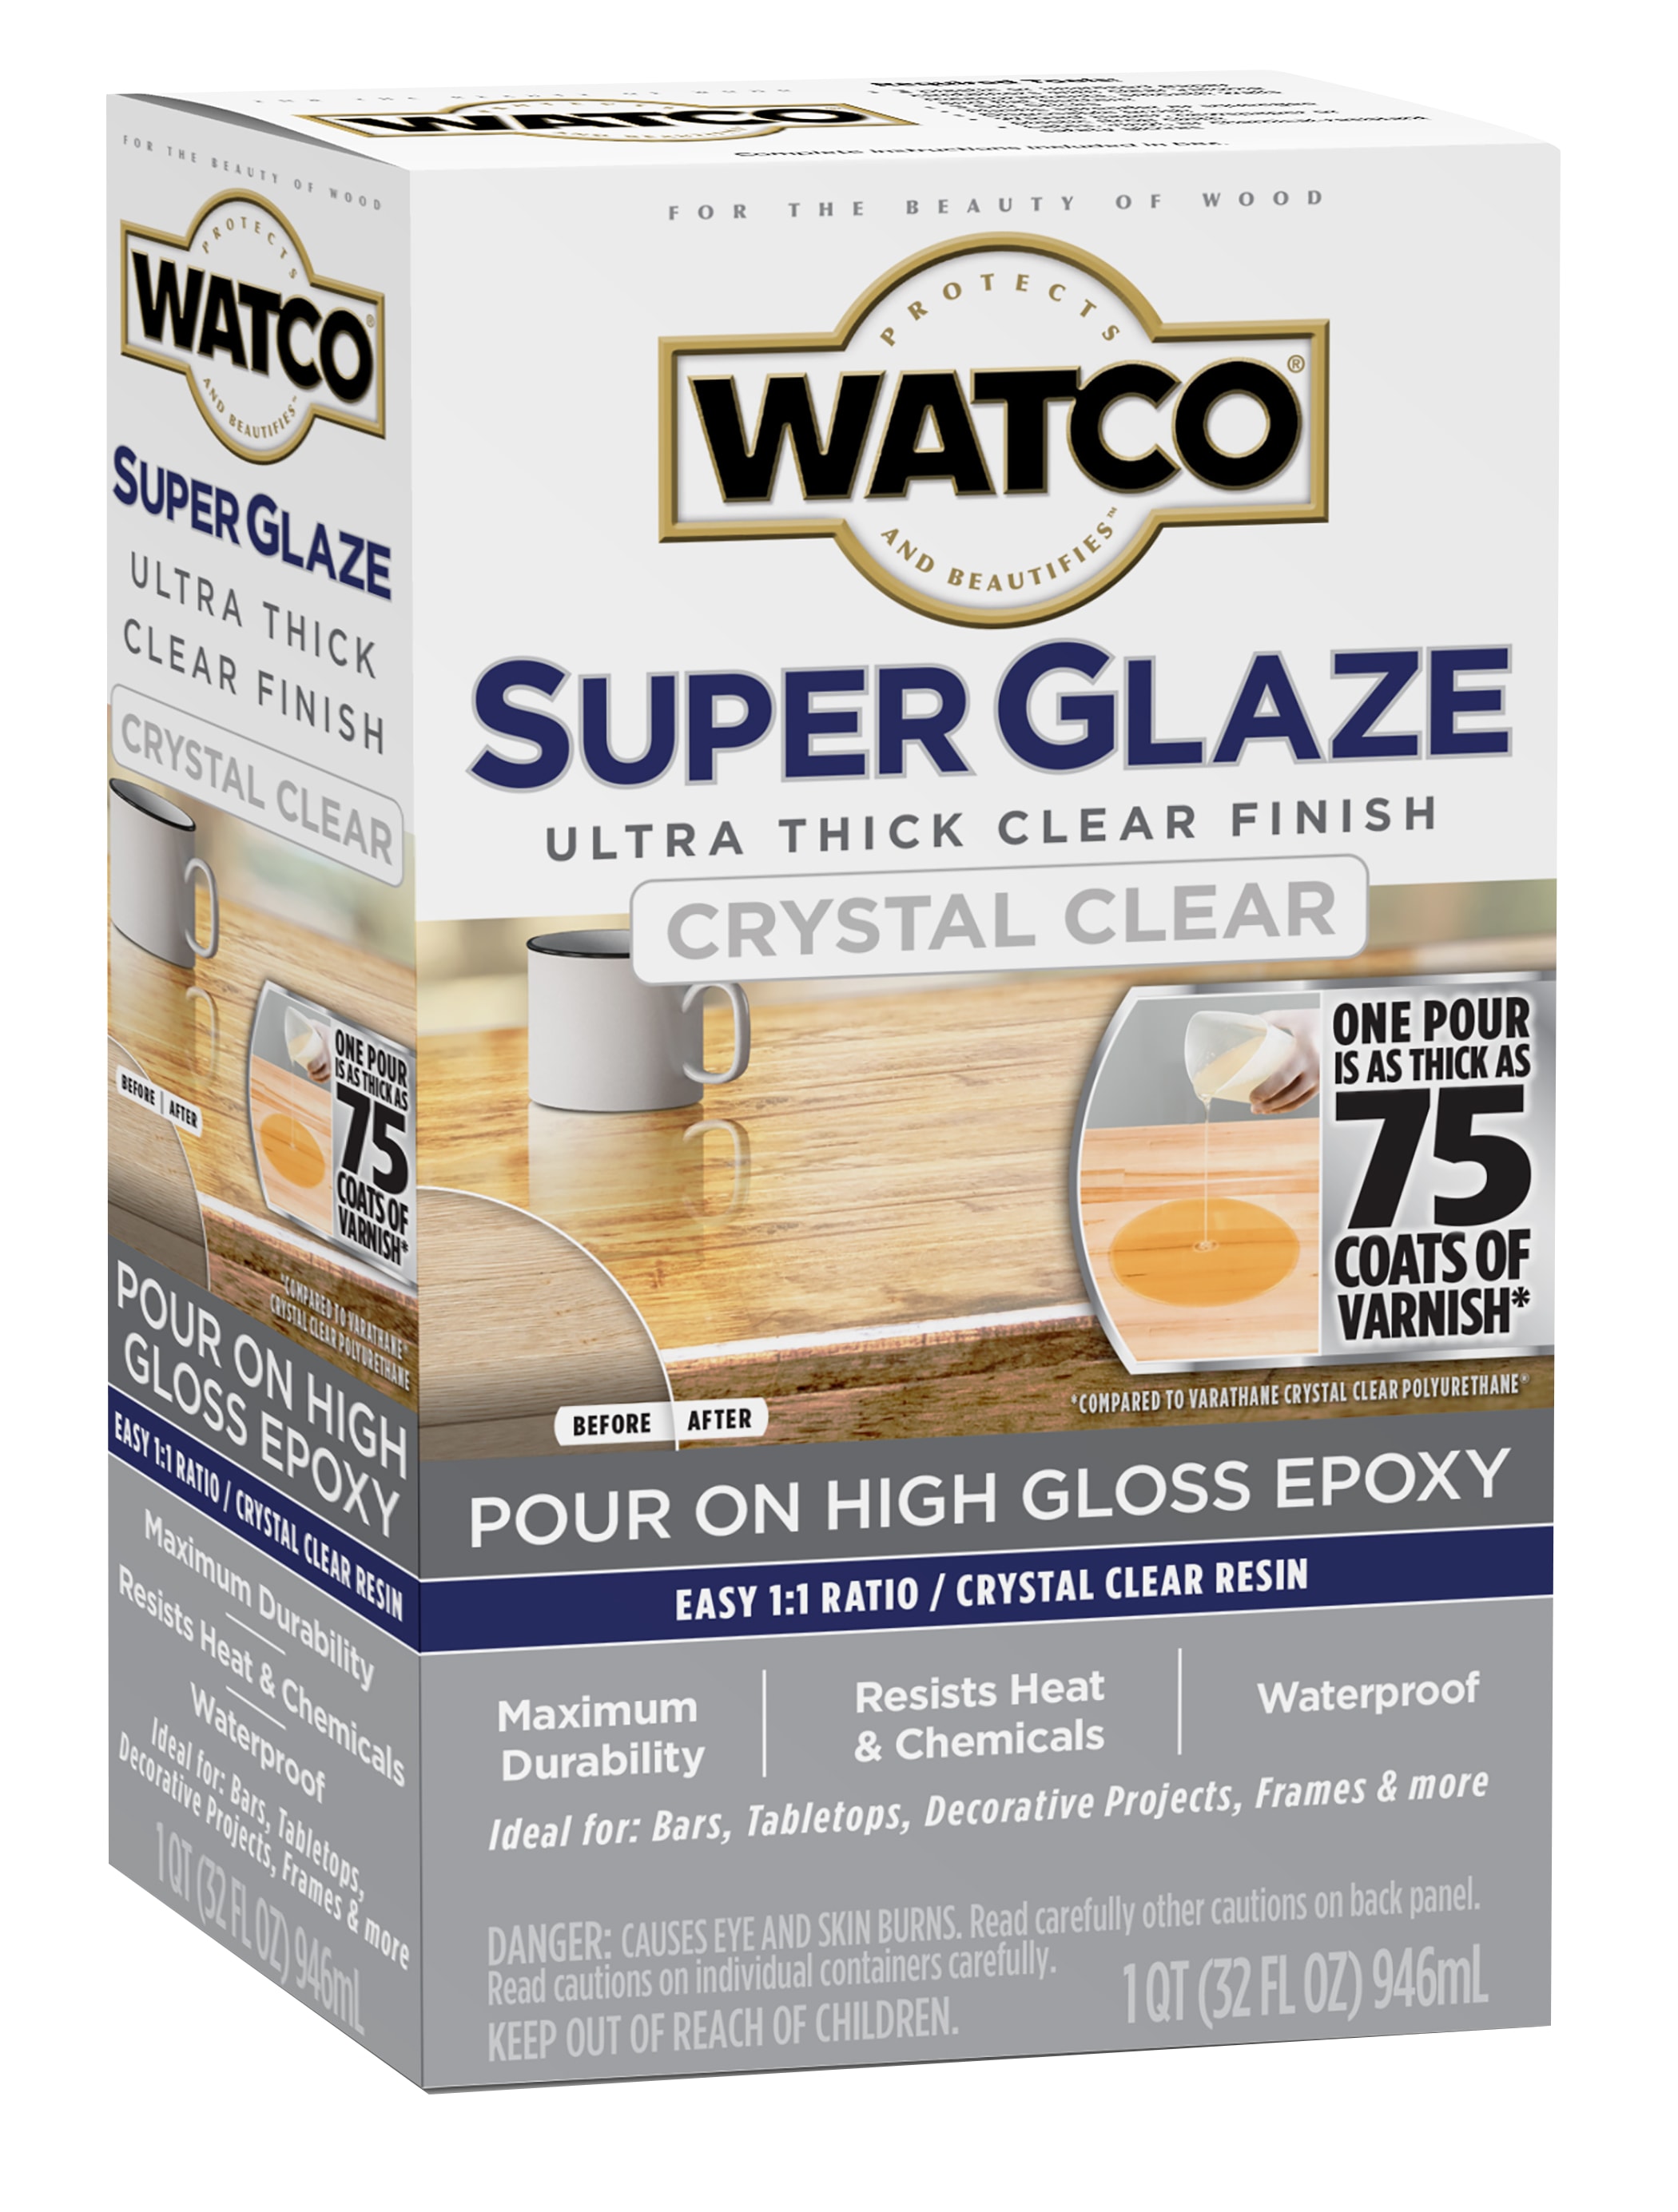 Dyco Tuff Glaze 5 gal. C22W Clear High Gloss Waterborne Acrylic Sealer  DYCC22W/5 - The Home Depot